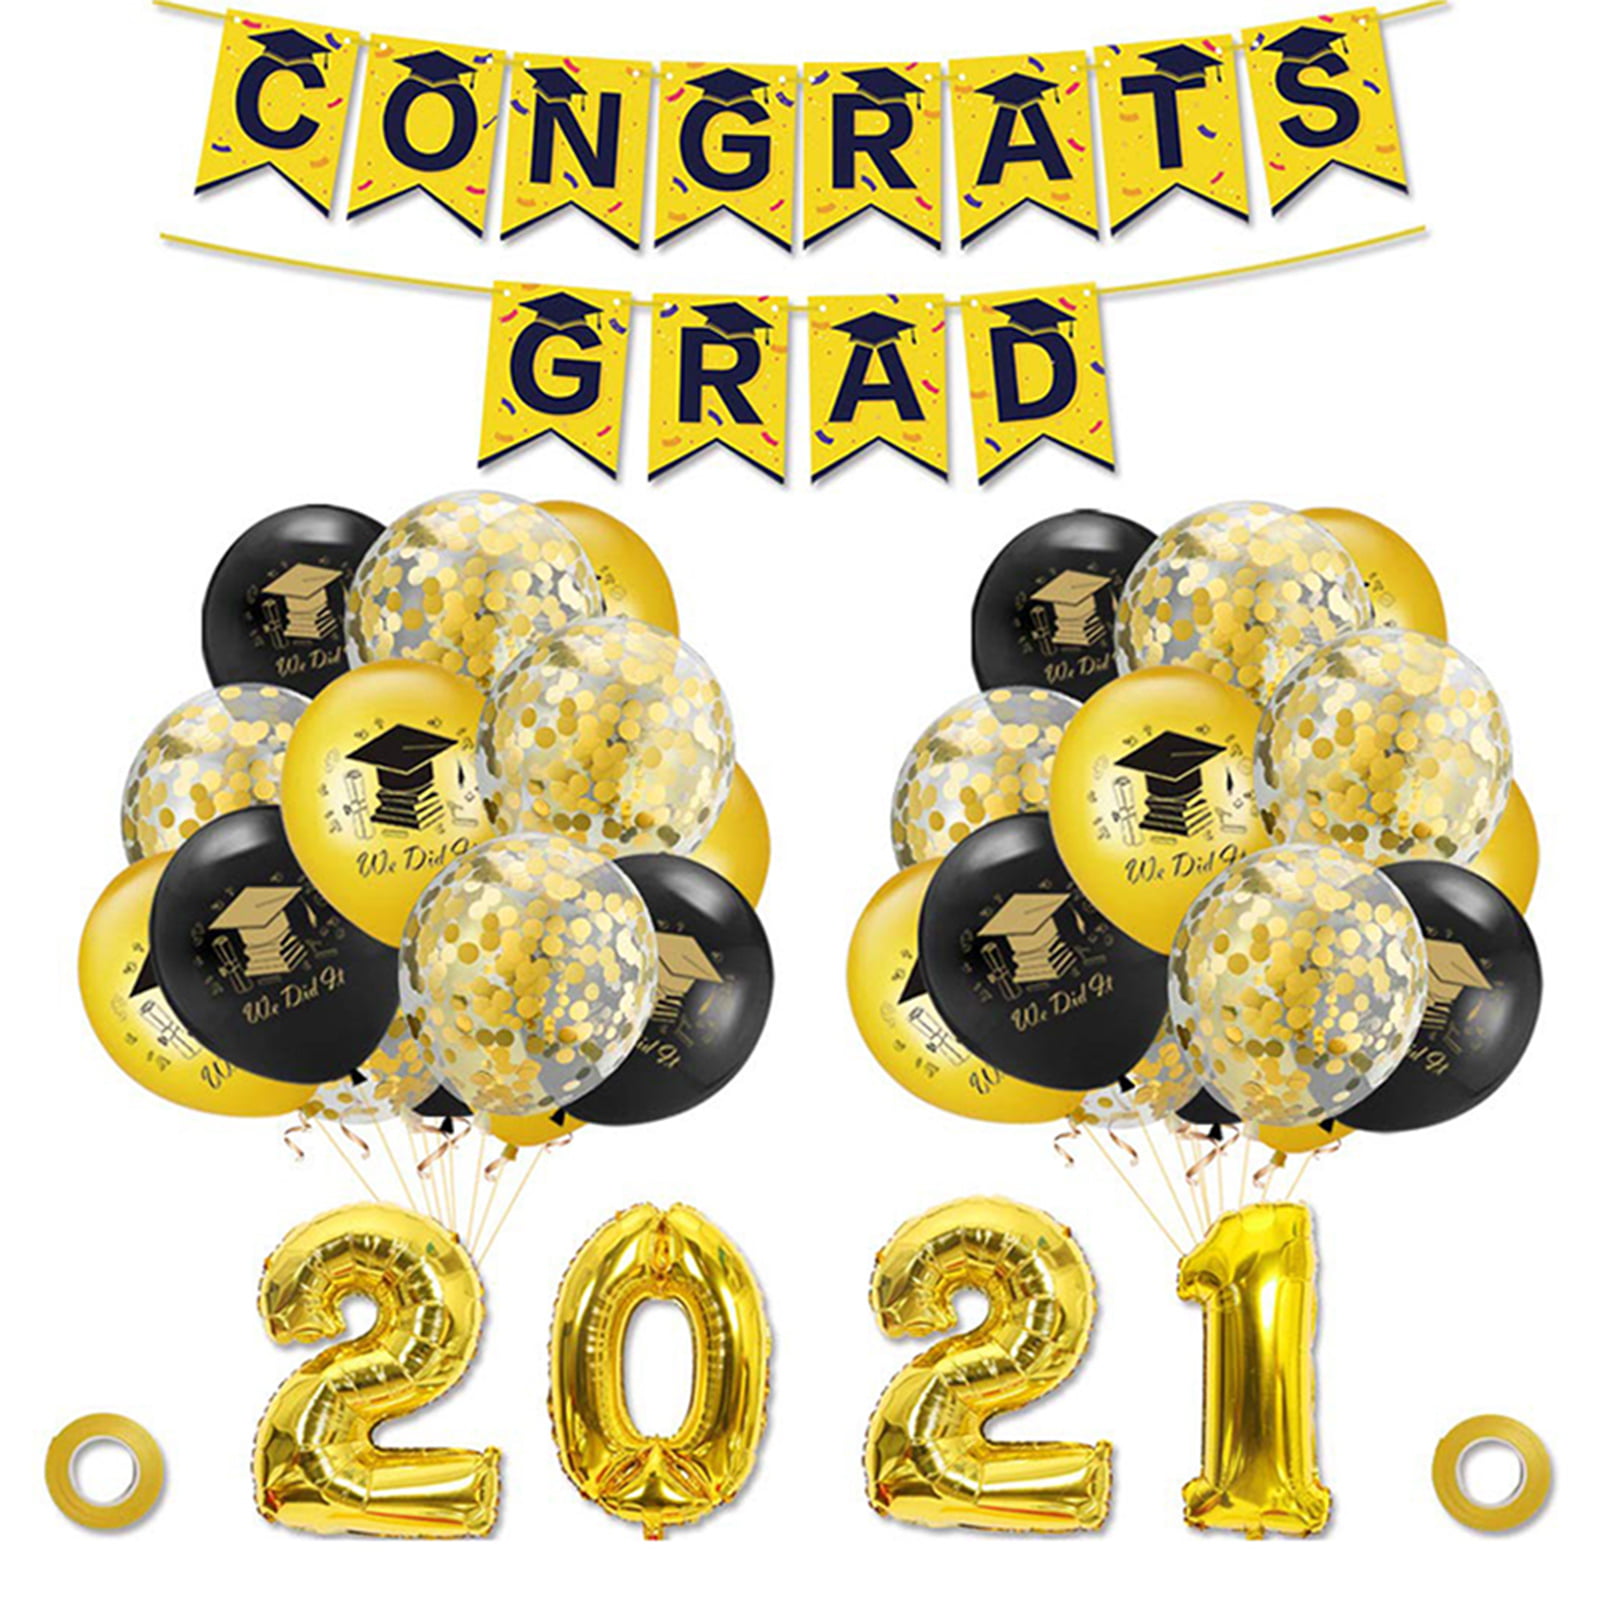 Congrats Grad Message Latex Balloons Senior College 11" Graduation Party Decor 